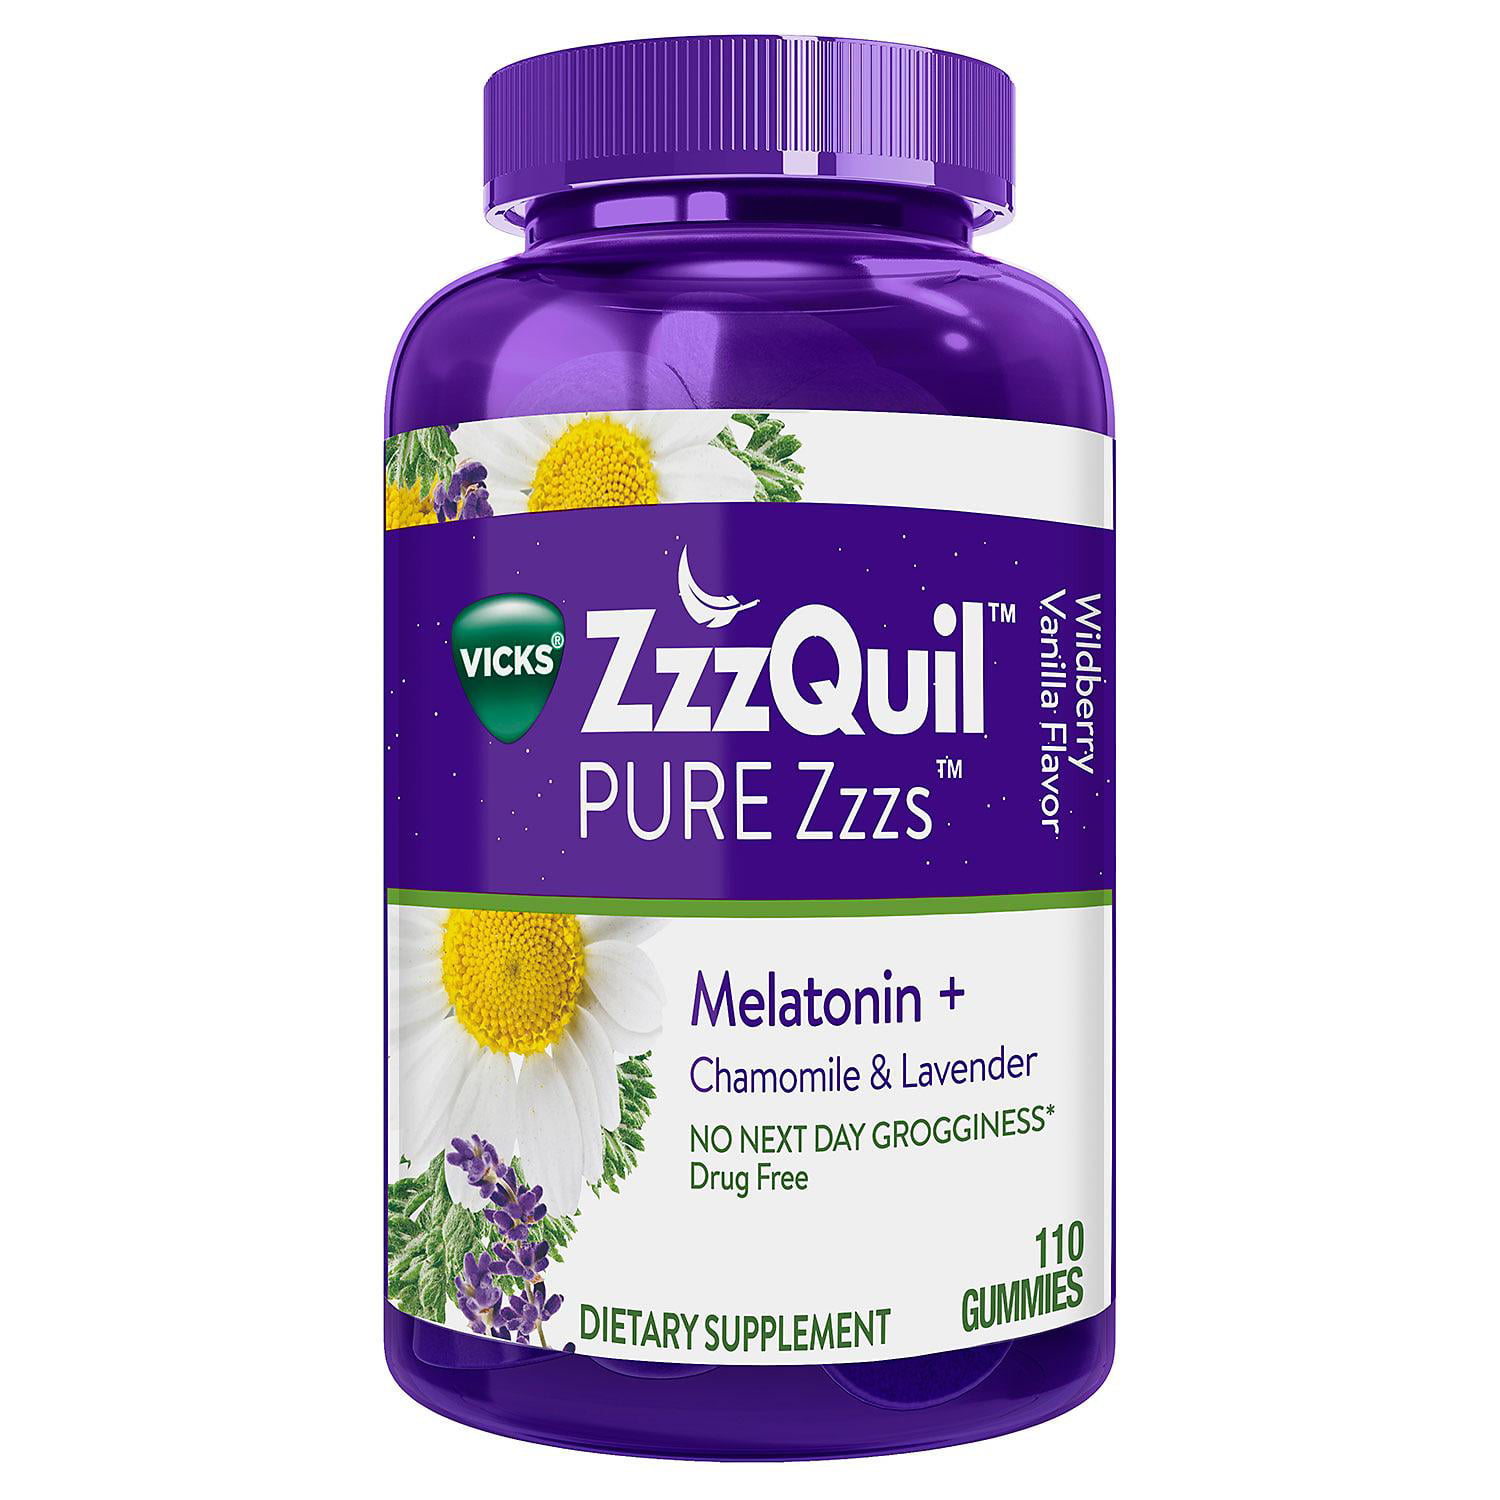 The Vicks ZzzQuil PURE Zzzs Melatonin Natural Flavor Sleep Aid Gummies ...